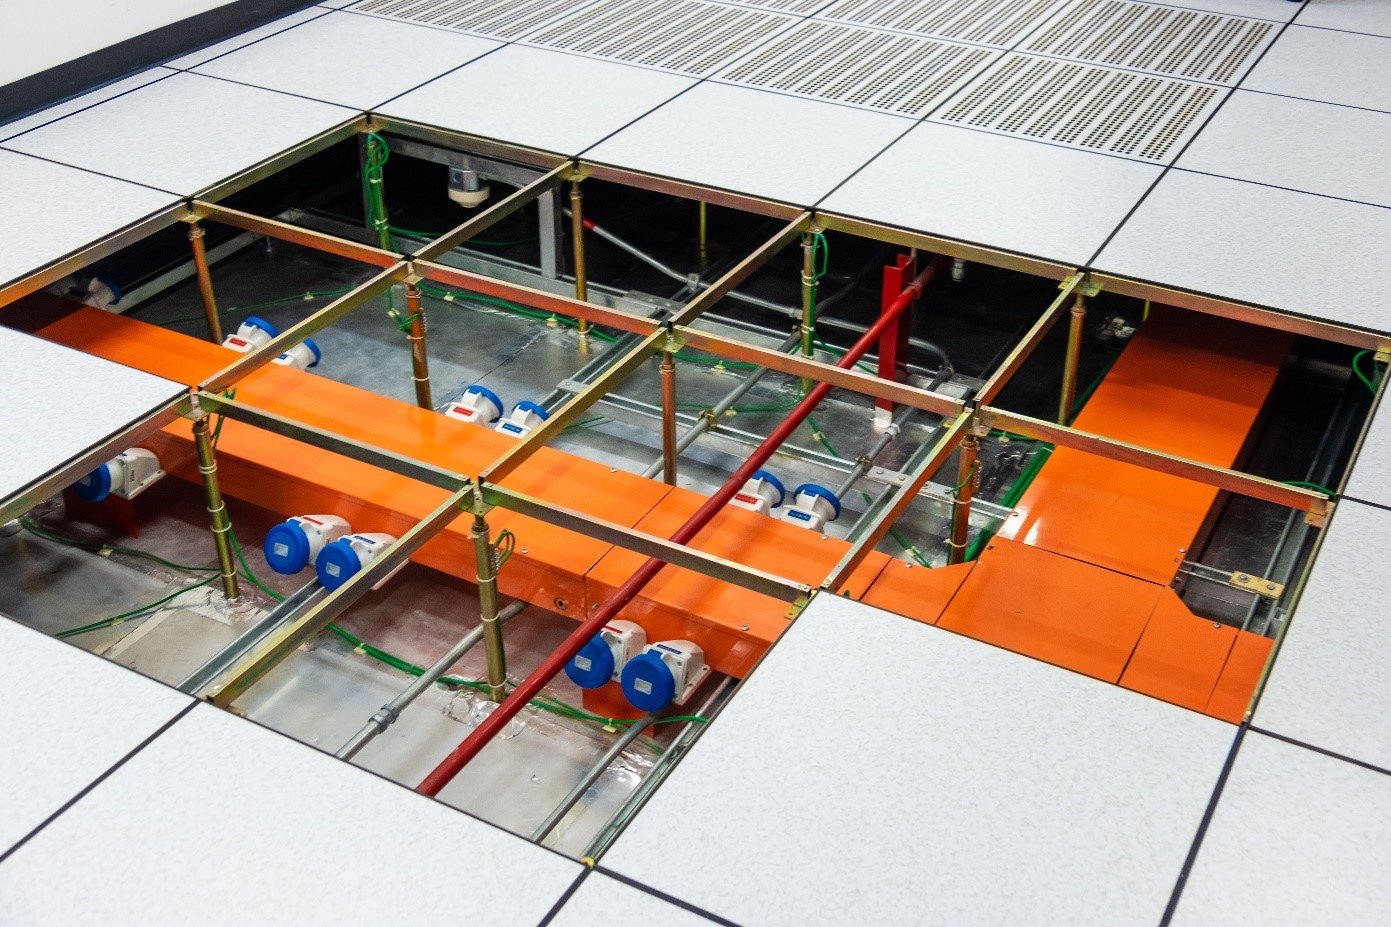 Figure 2. Example of raised floor data center wiring. Source: Sutiwat Jutiamornloes/Shutterstock